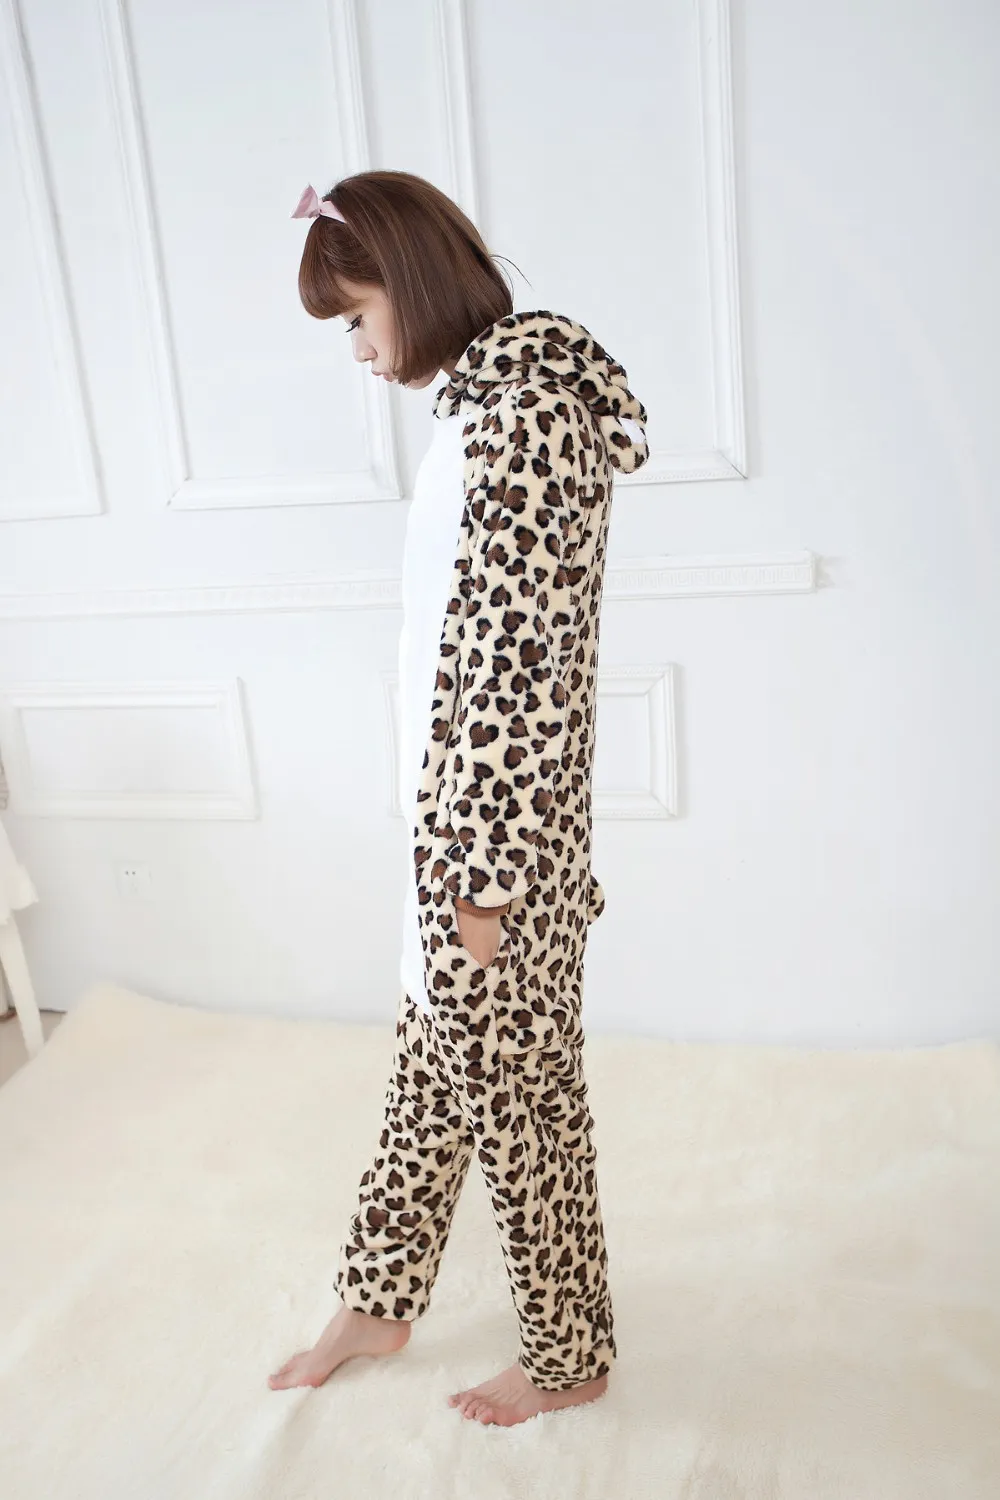 Leopardo Urso Onesies Adultos Unisex Animal Pijamas de Flanela Com Capuz Cosplay macacão Panda Pijamas Sleepwear Casa roupas macacão